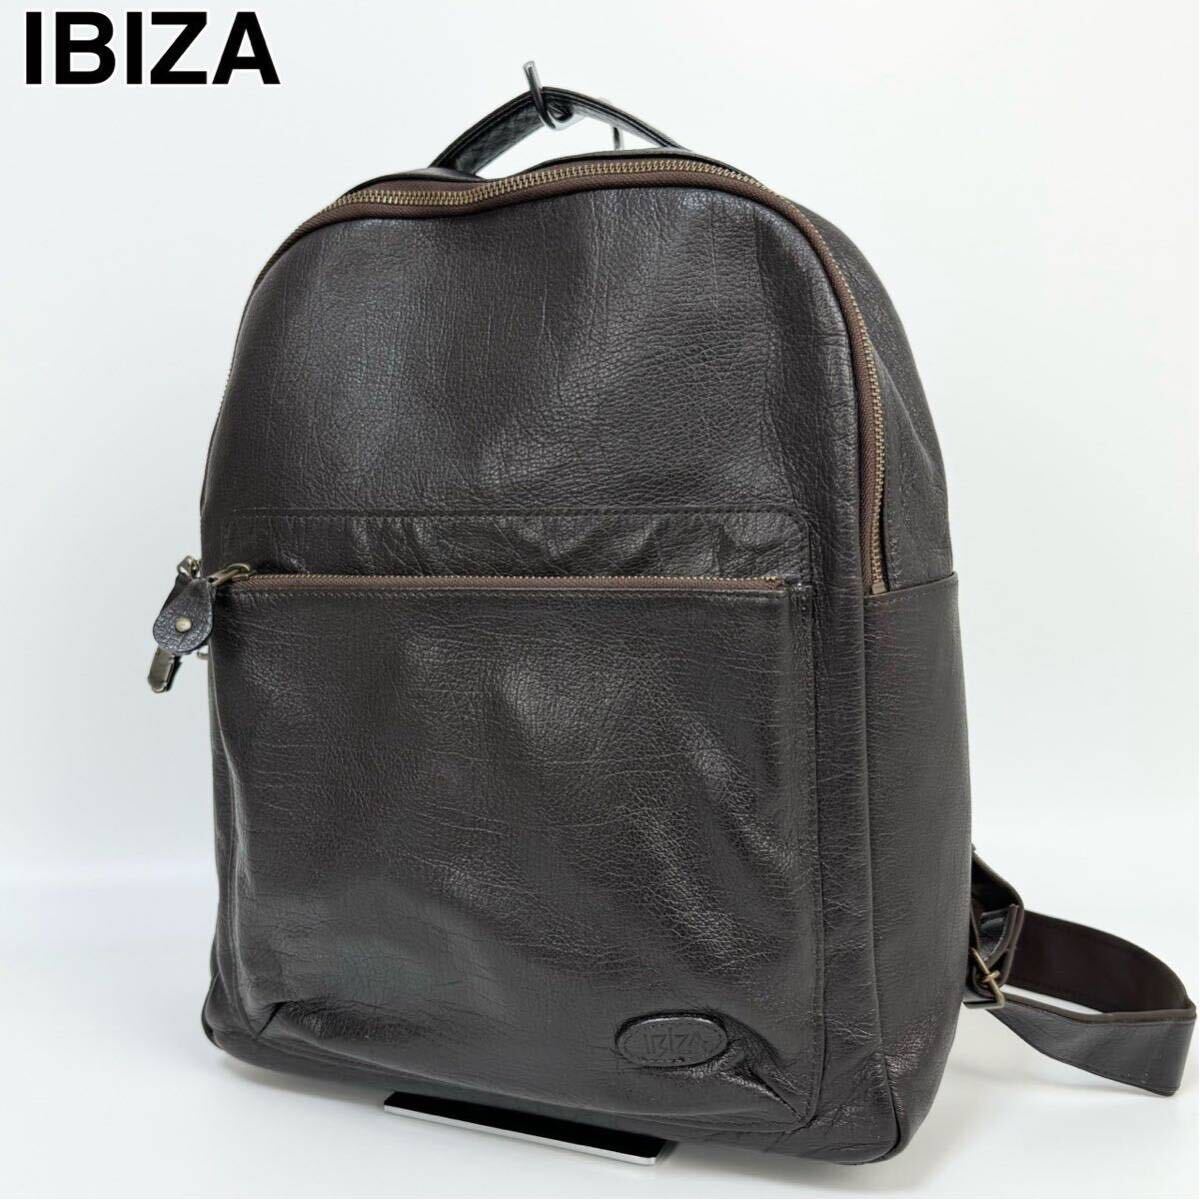 24C23 ibizaibi The ibisa rucksack original leather 